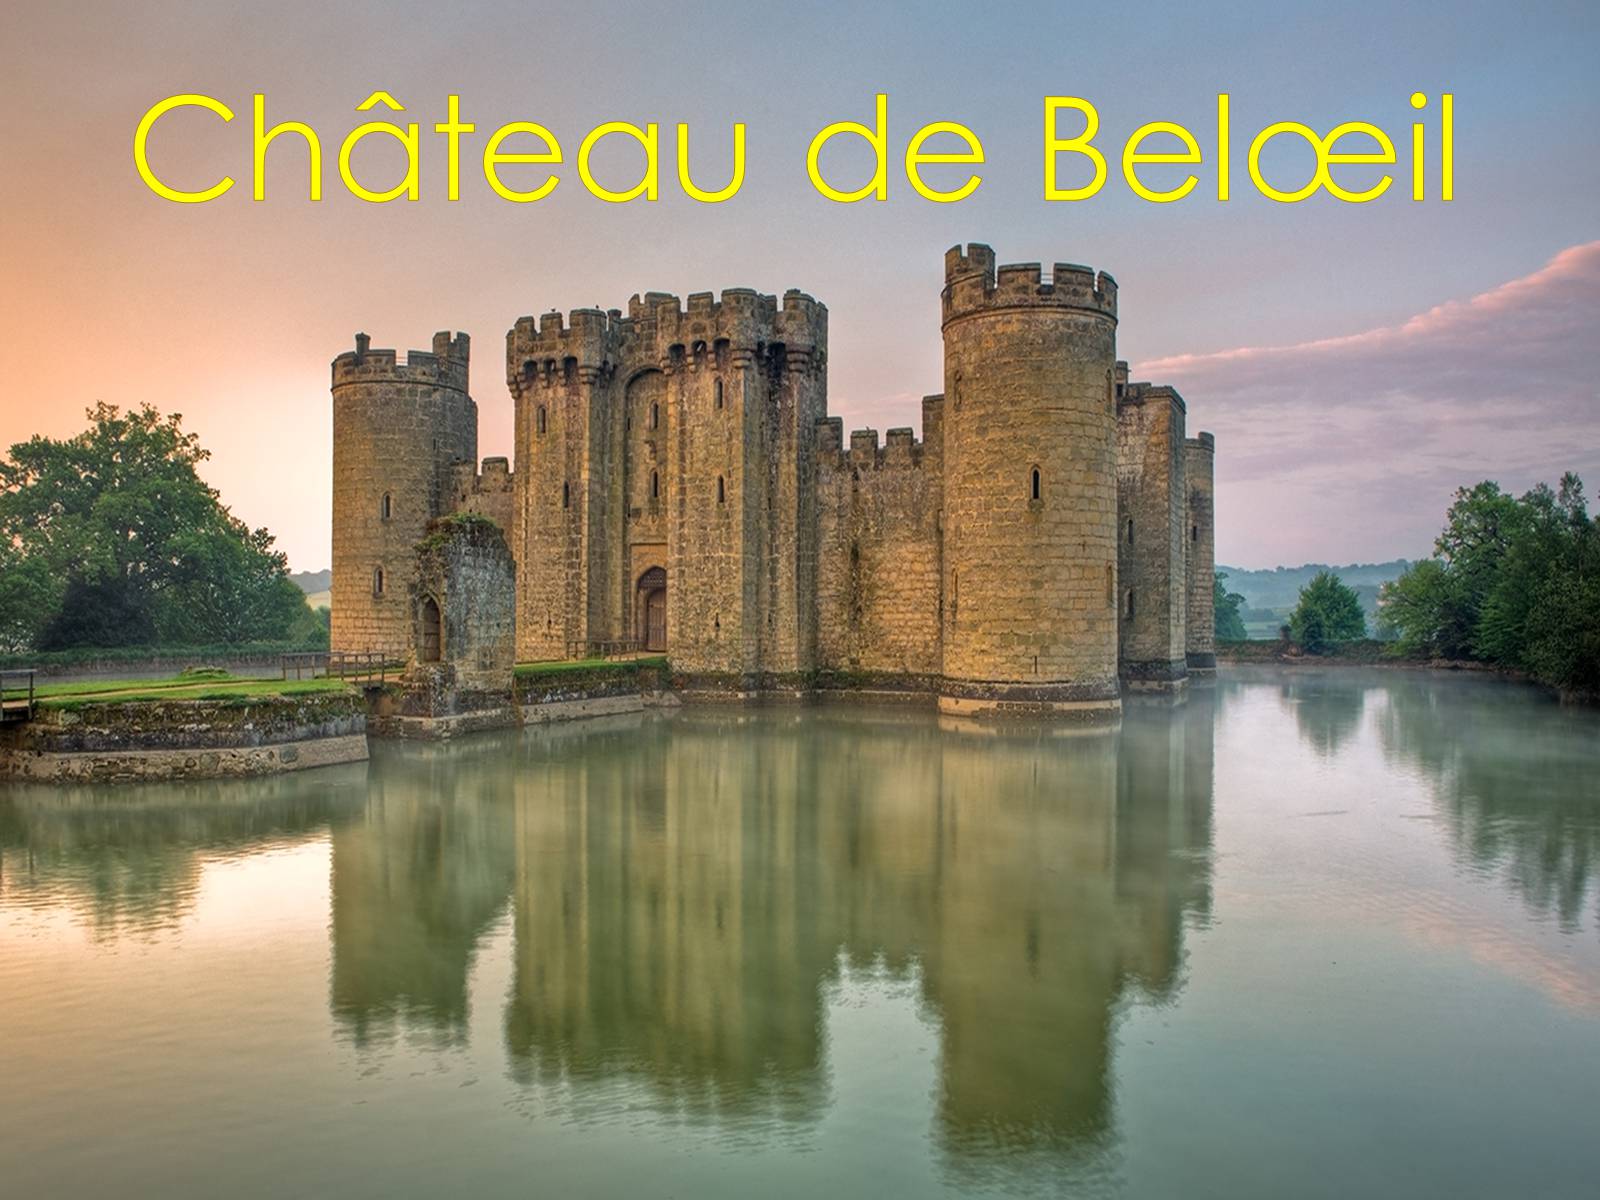 Презентація на тему «Royaume de Belgique» - Слайд #12